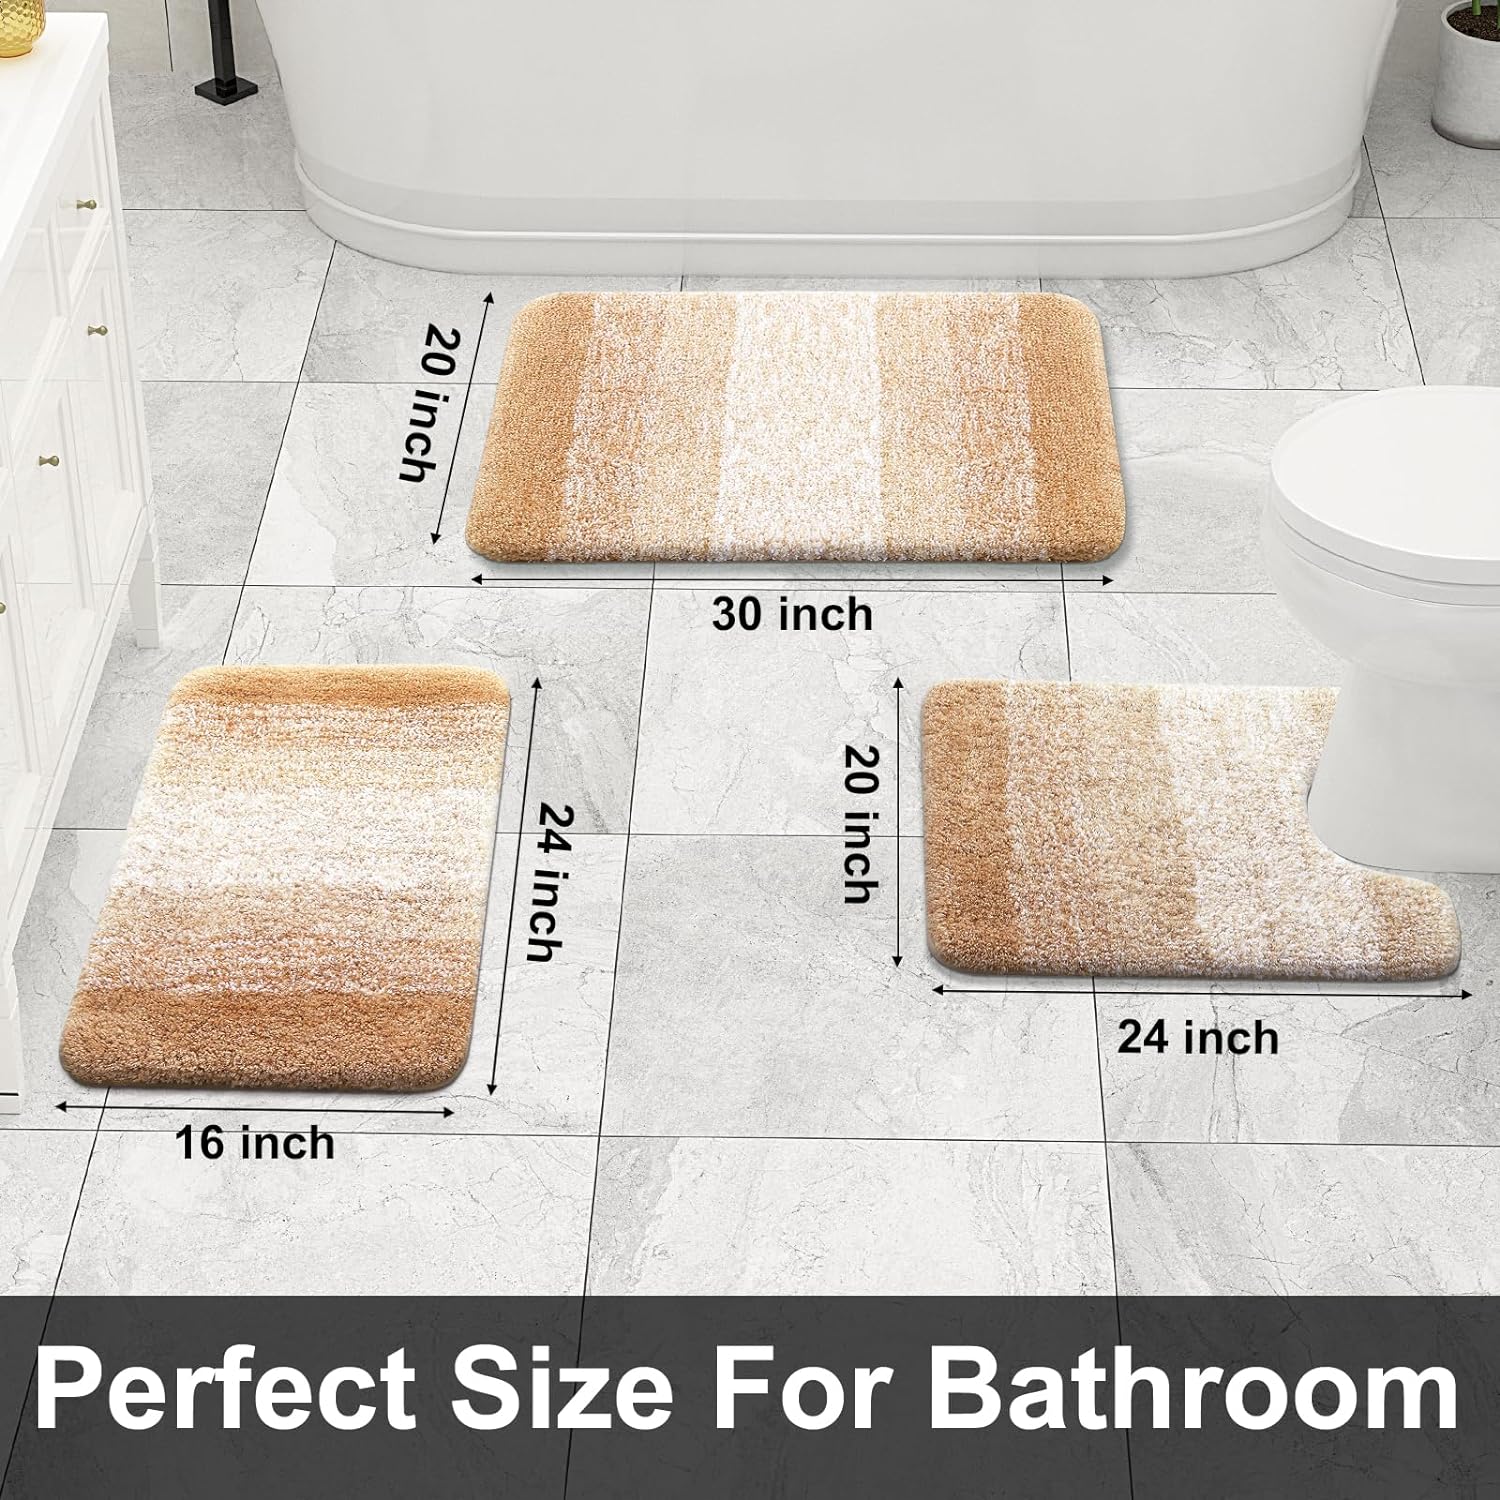 OLANLY Luxury Bathroom Rug Set 2 Piece, Soft Absorbent Microfiber Bath Rugs and U-Shaped Contour Toilet Rug, Non-Slip Bath Carpet, Machine Wash Dry, Bath Mats for Bathroom (24x16+24x20, Grey)